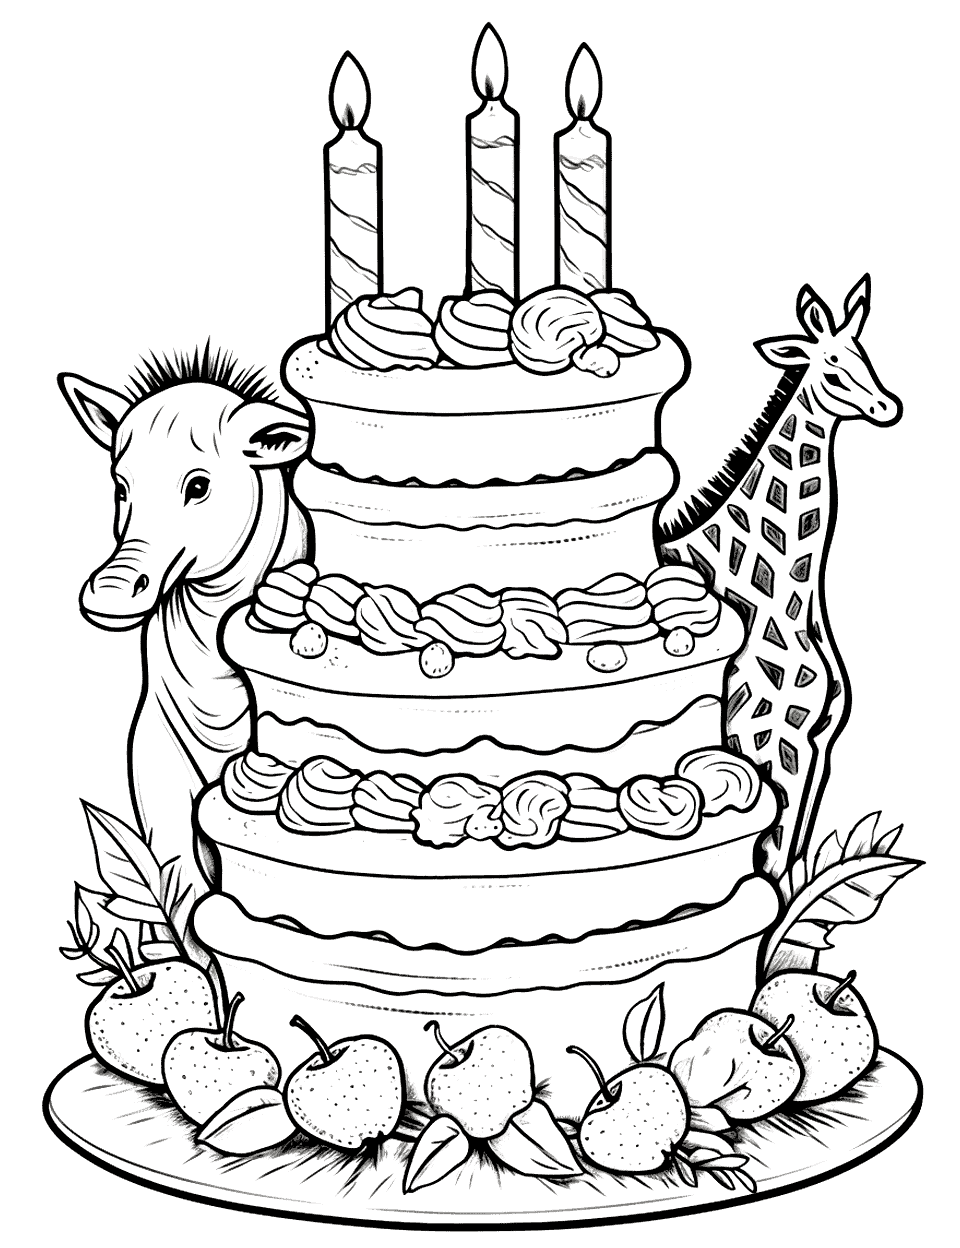 Safari Adventure Cake Coloring Page - A cake with safari animals.